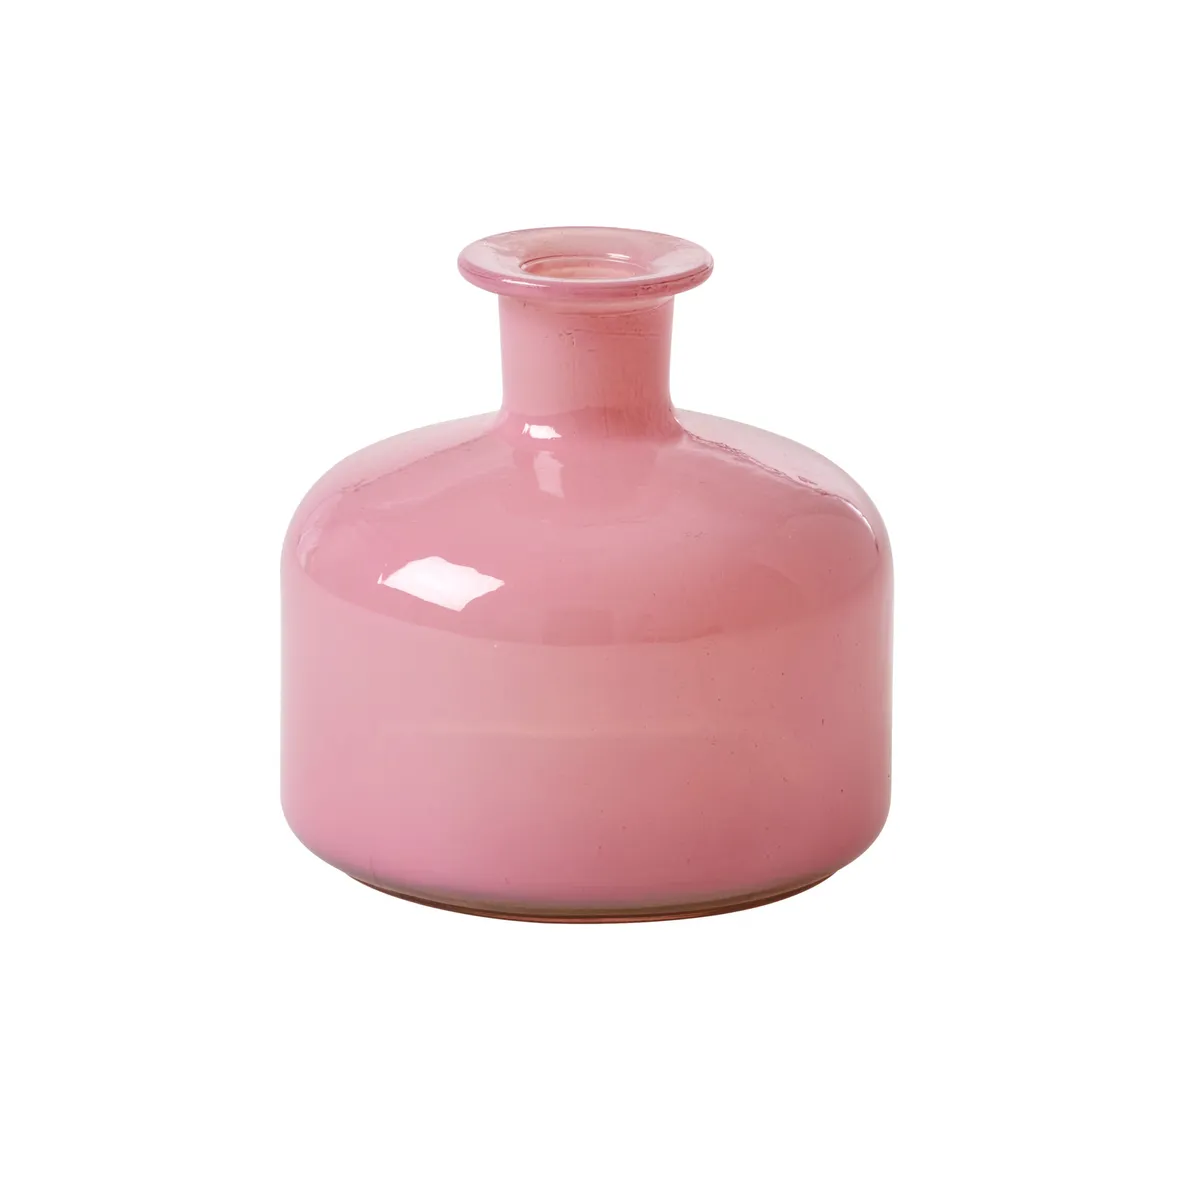 TakaTomo small dusty pink vase